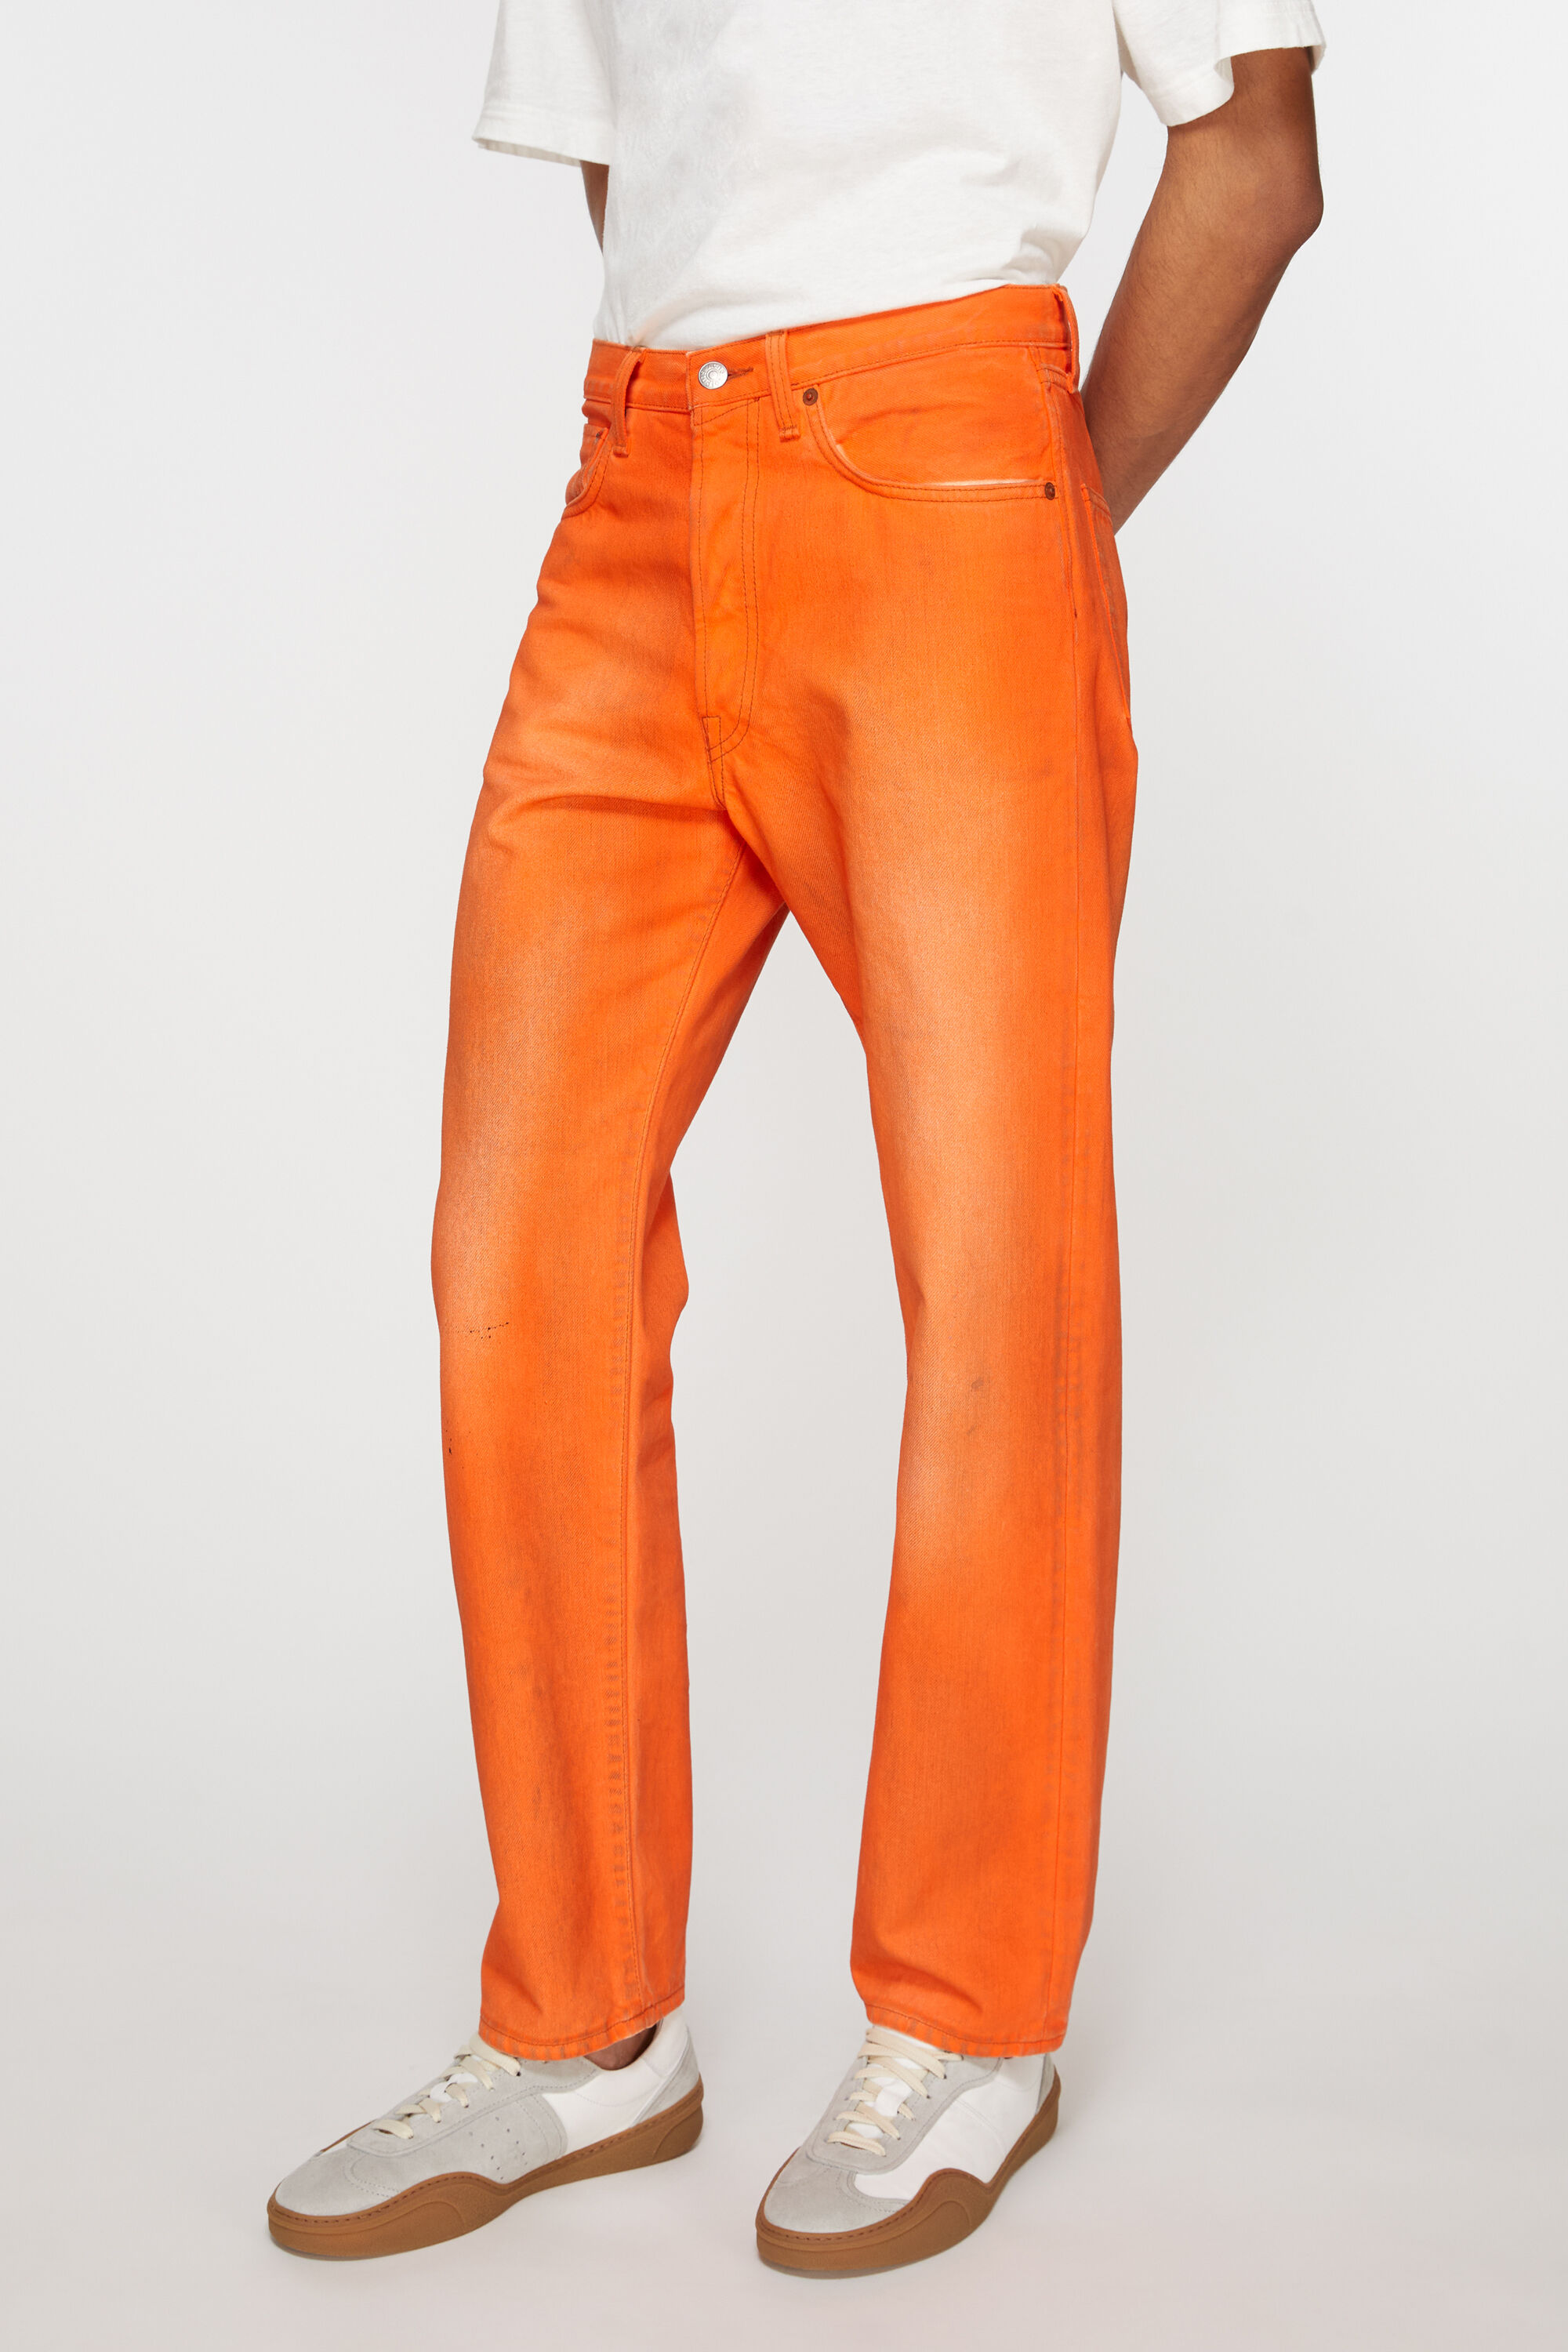 Rufskin Jimmy Jeans burnt orange Jeans / Pants - menssecret.com